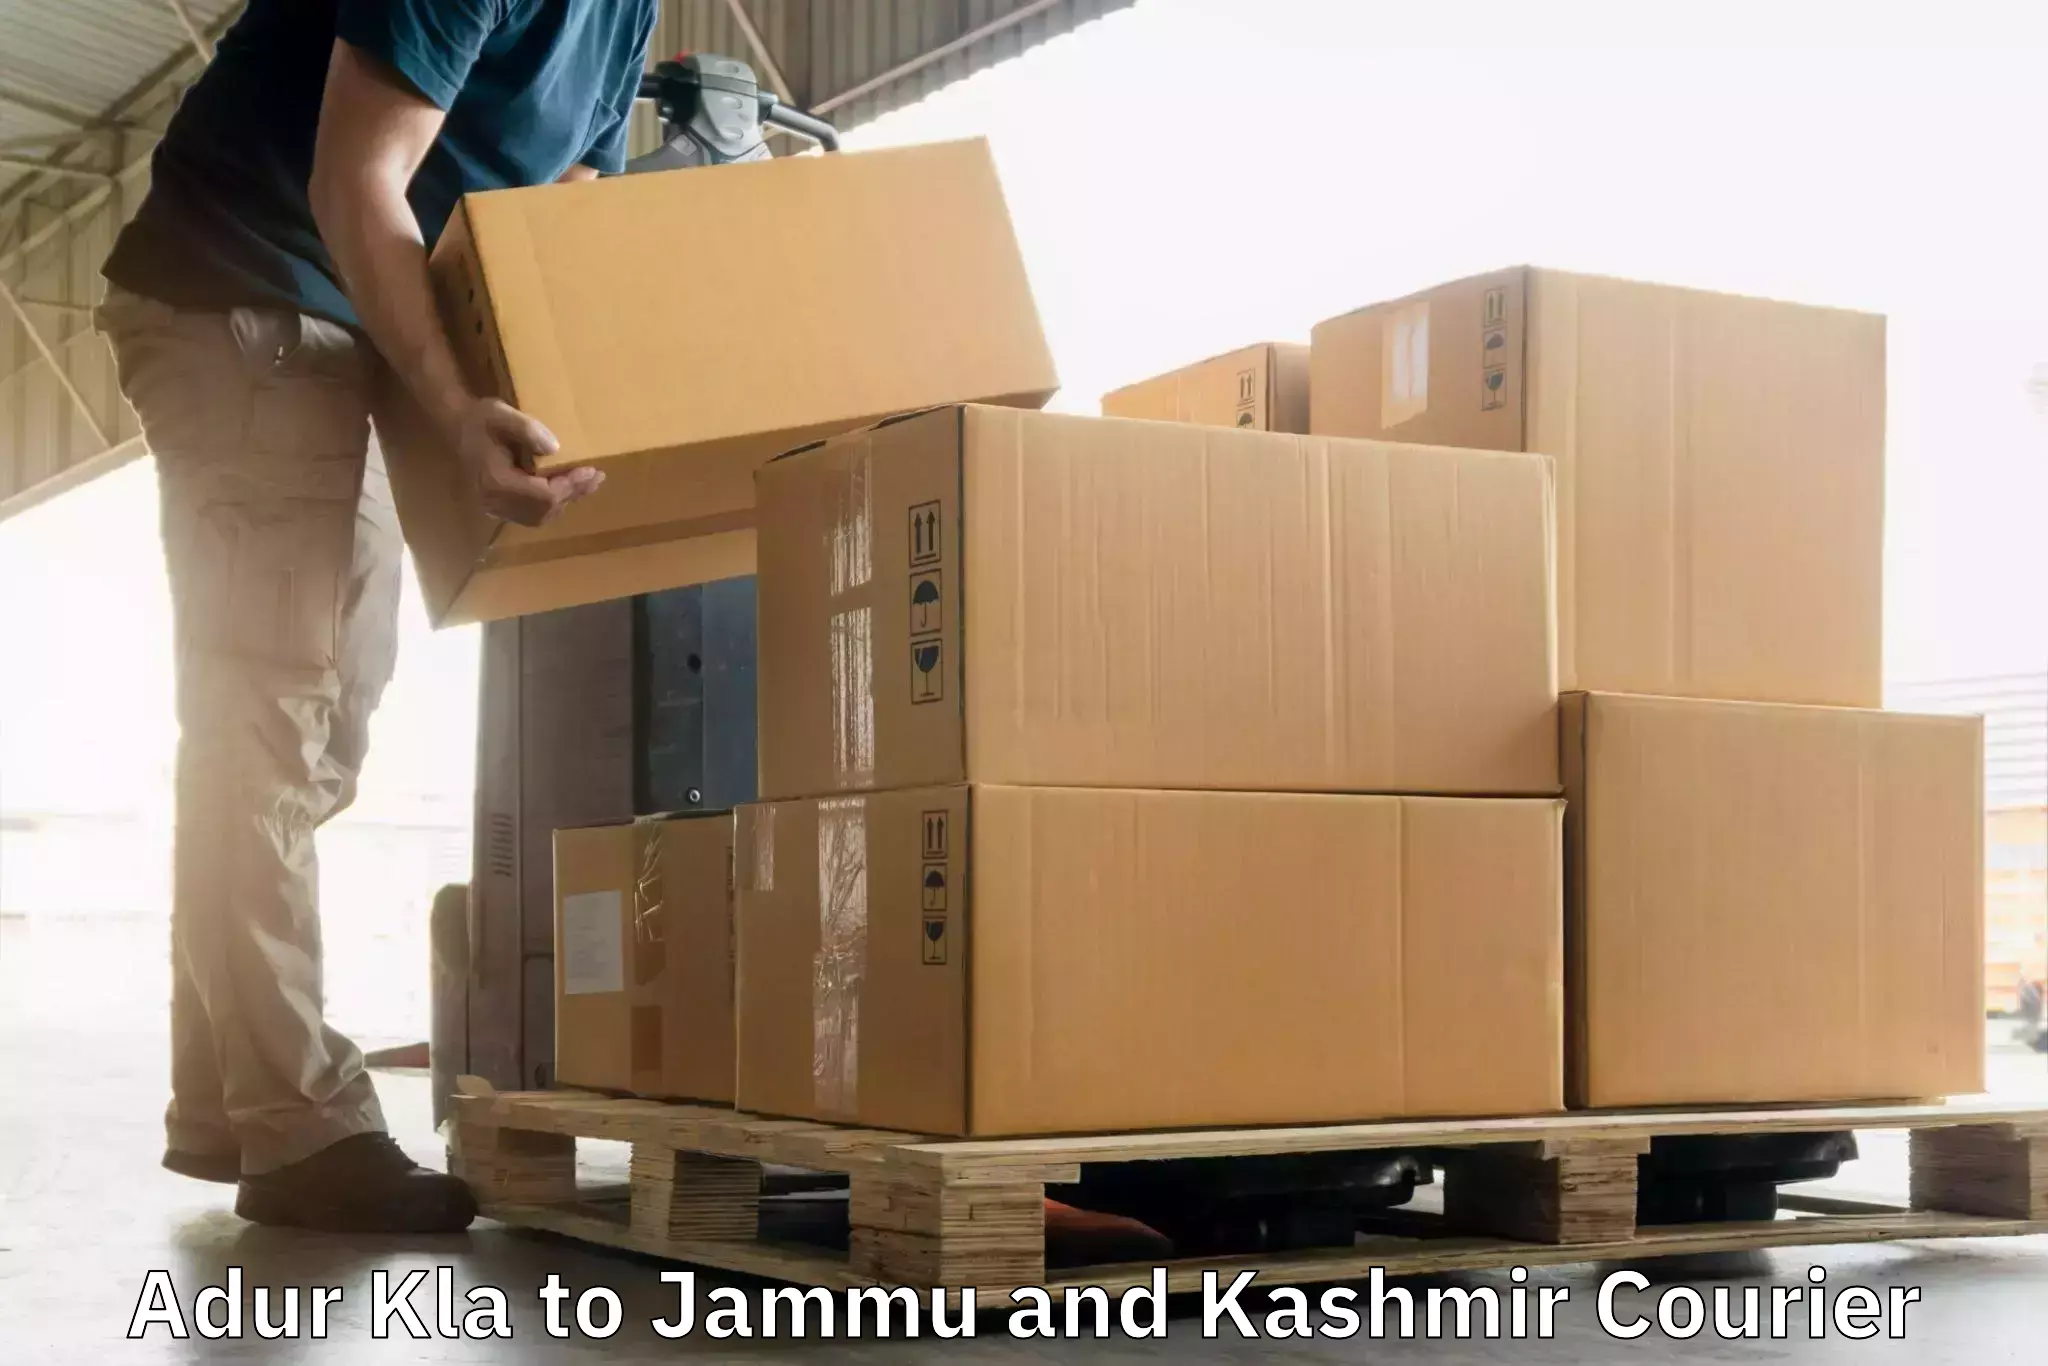 International parcel service Adur Kla to Pulwama